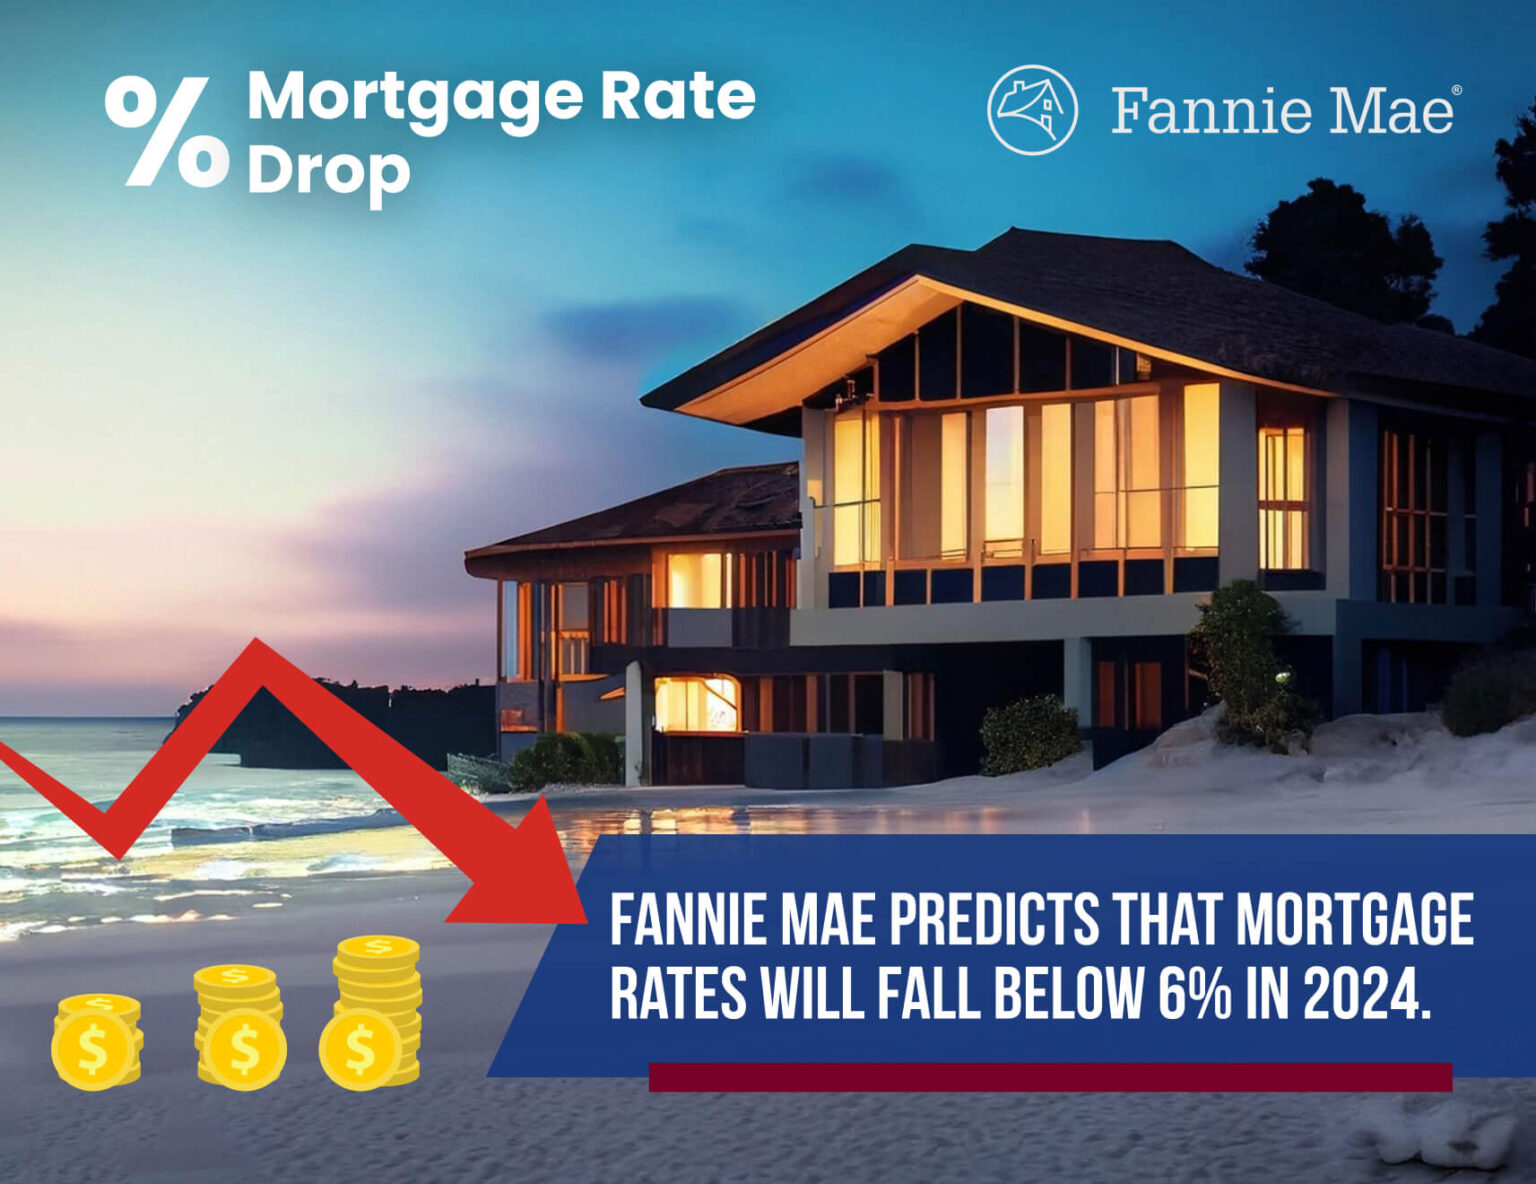 Fannie Mae Predicts Mortgage Rates Below 6 in 2024